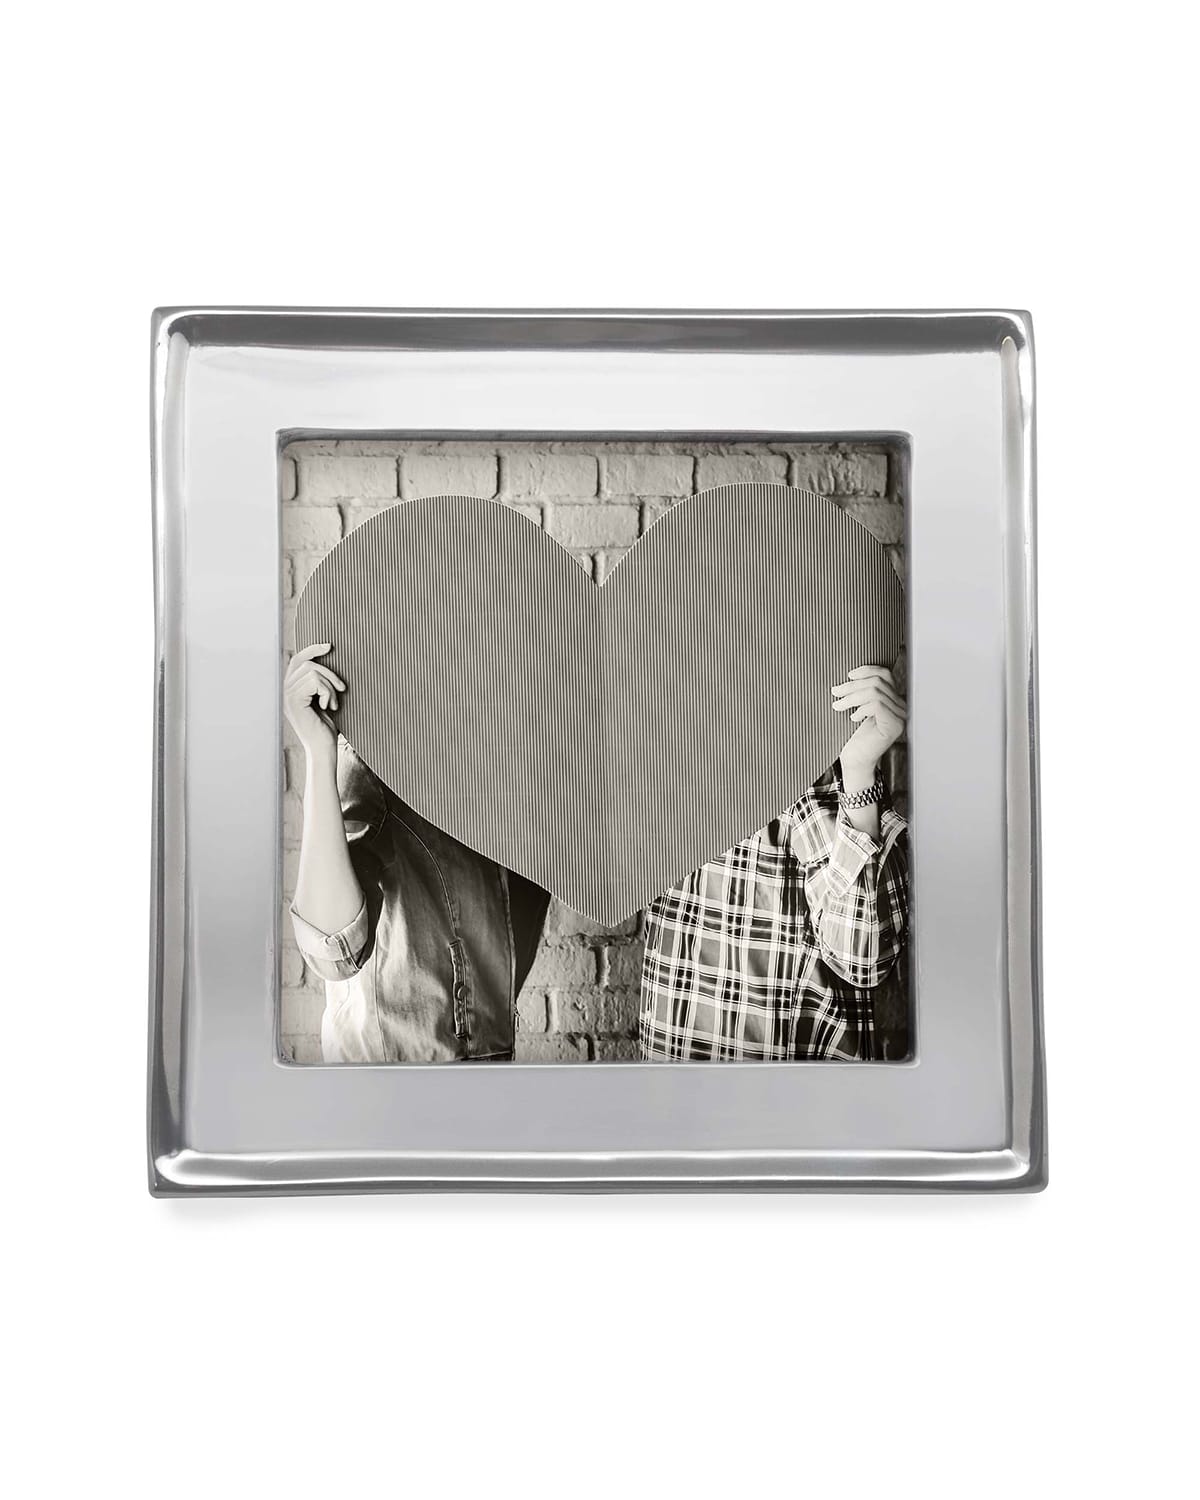 Diamond Heart Mirror Glass Photo Frame 4 x 4" Photo Size With Gift Box 